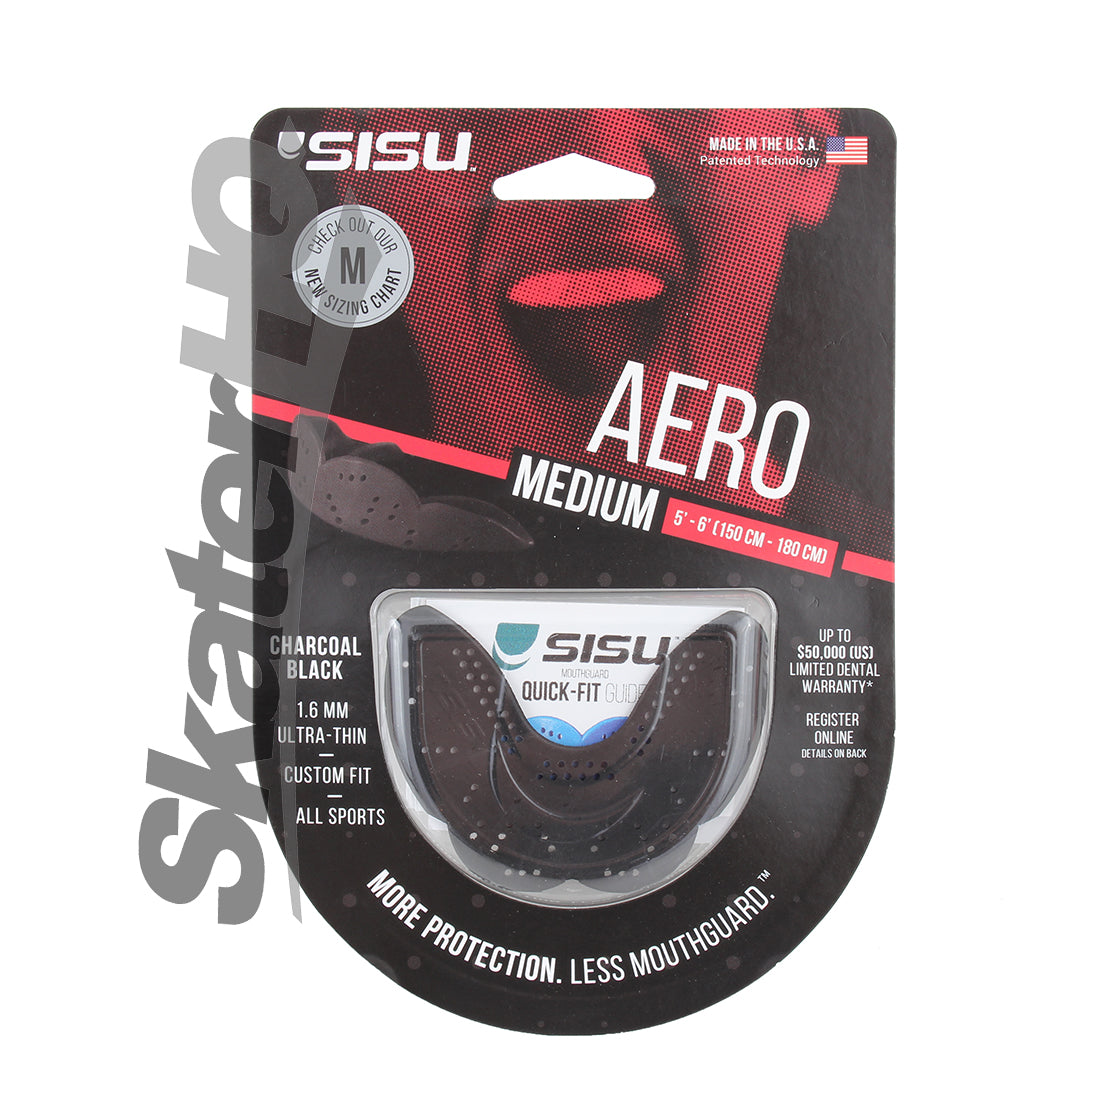 SISU AERO Mouthguard 1.6 Medium - Charcoal Black Protective Mouthguards